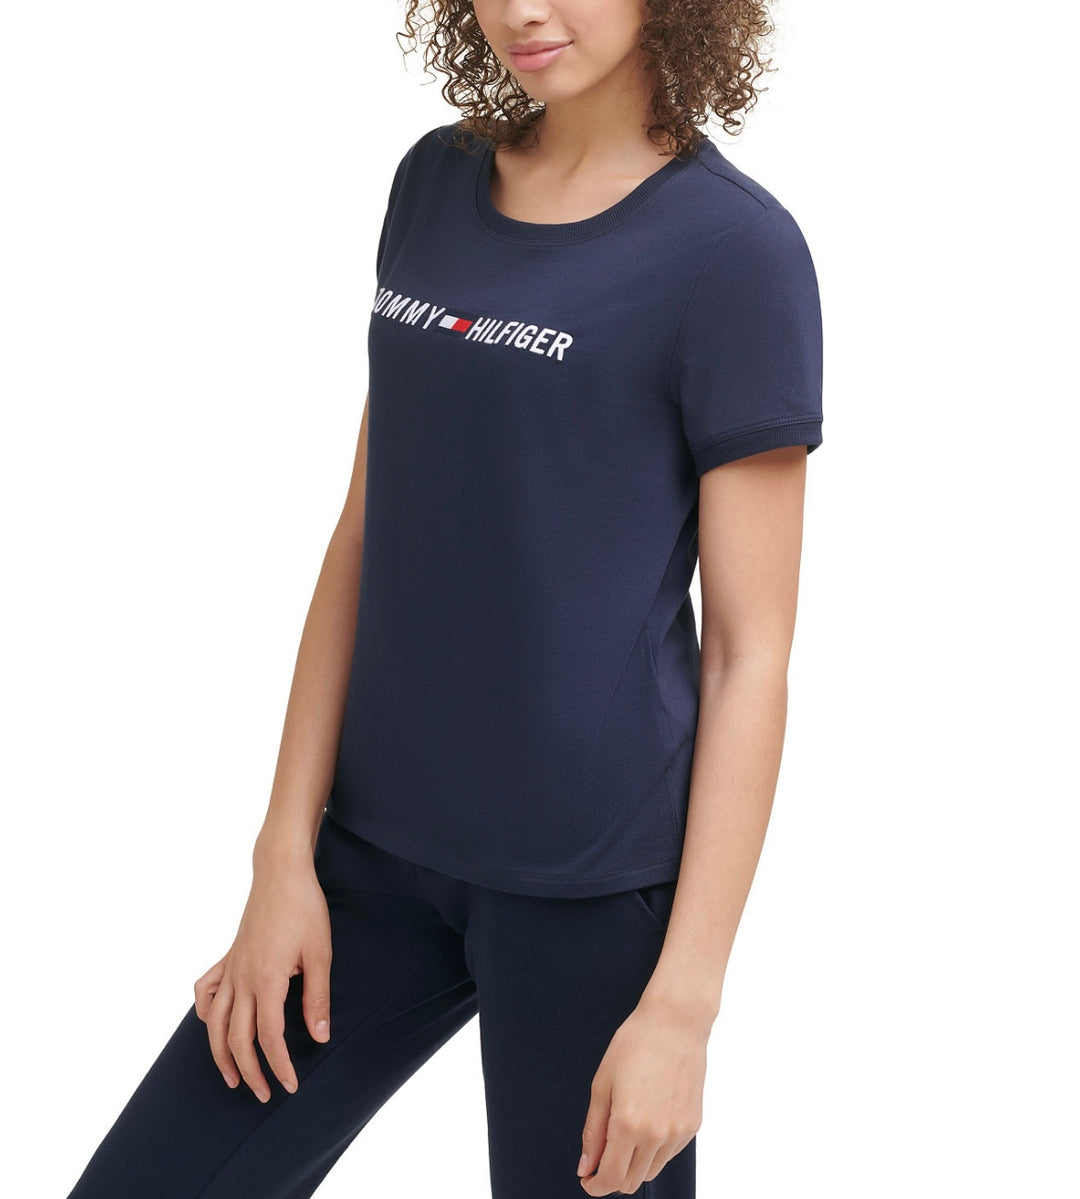 Tommy Hilfiger Sport Women's Embroidered Logo Crewneck T-Shirt Navy